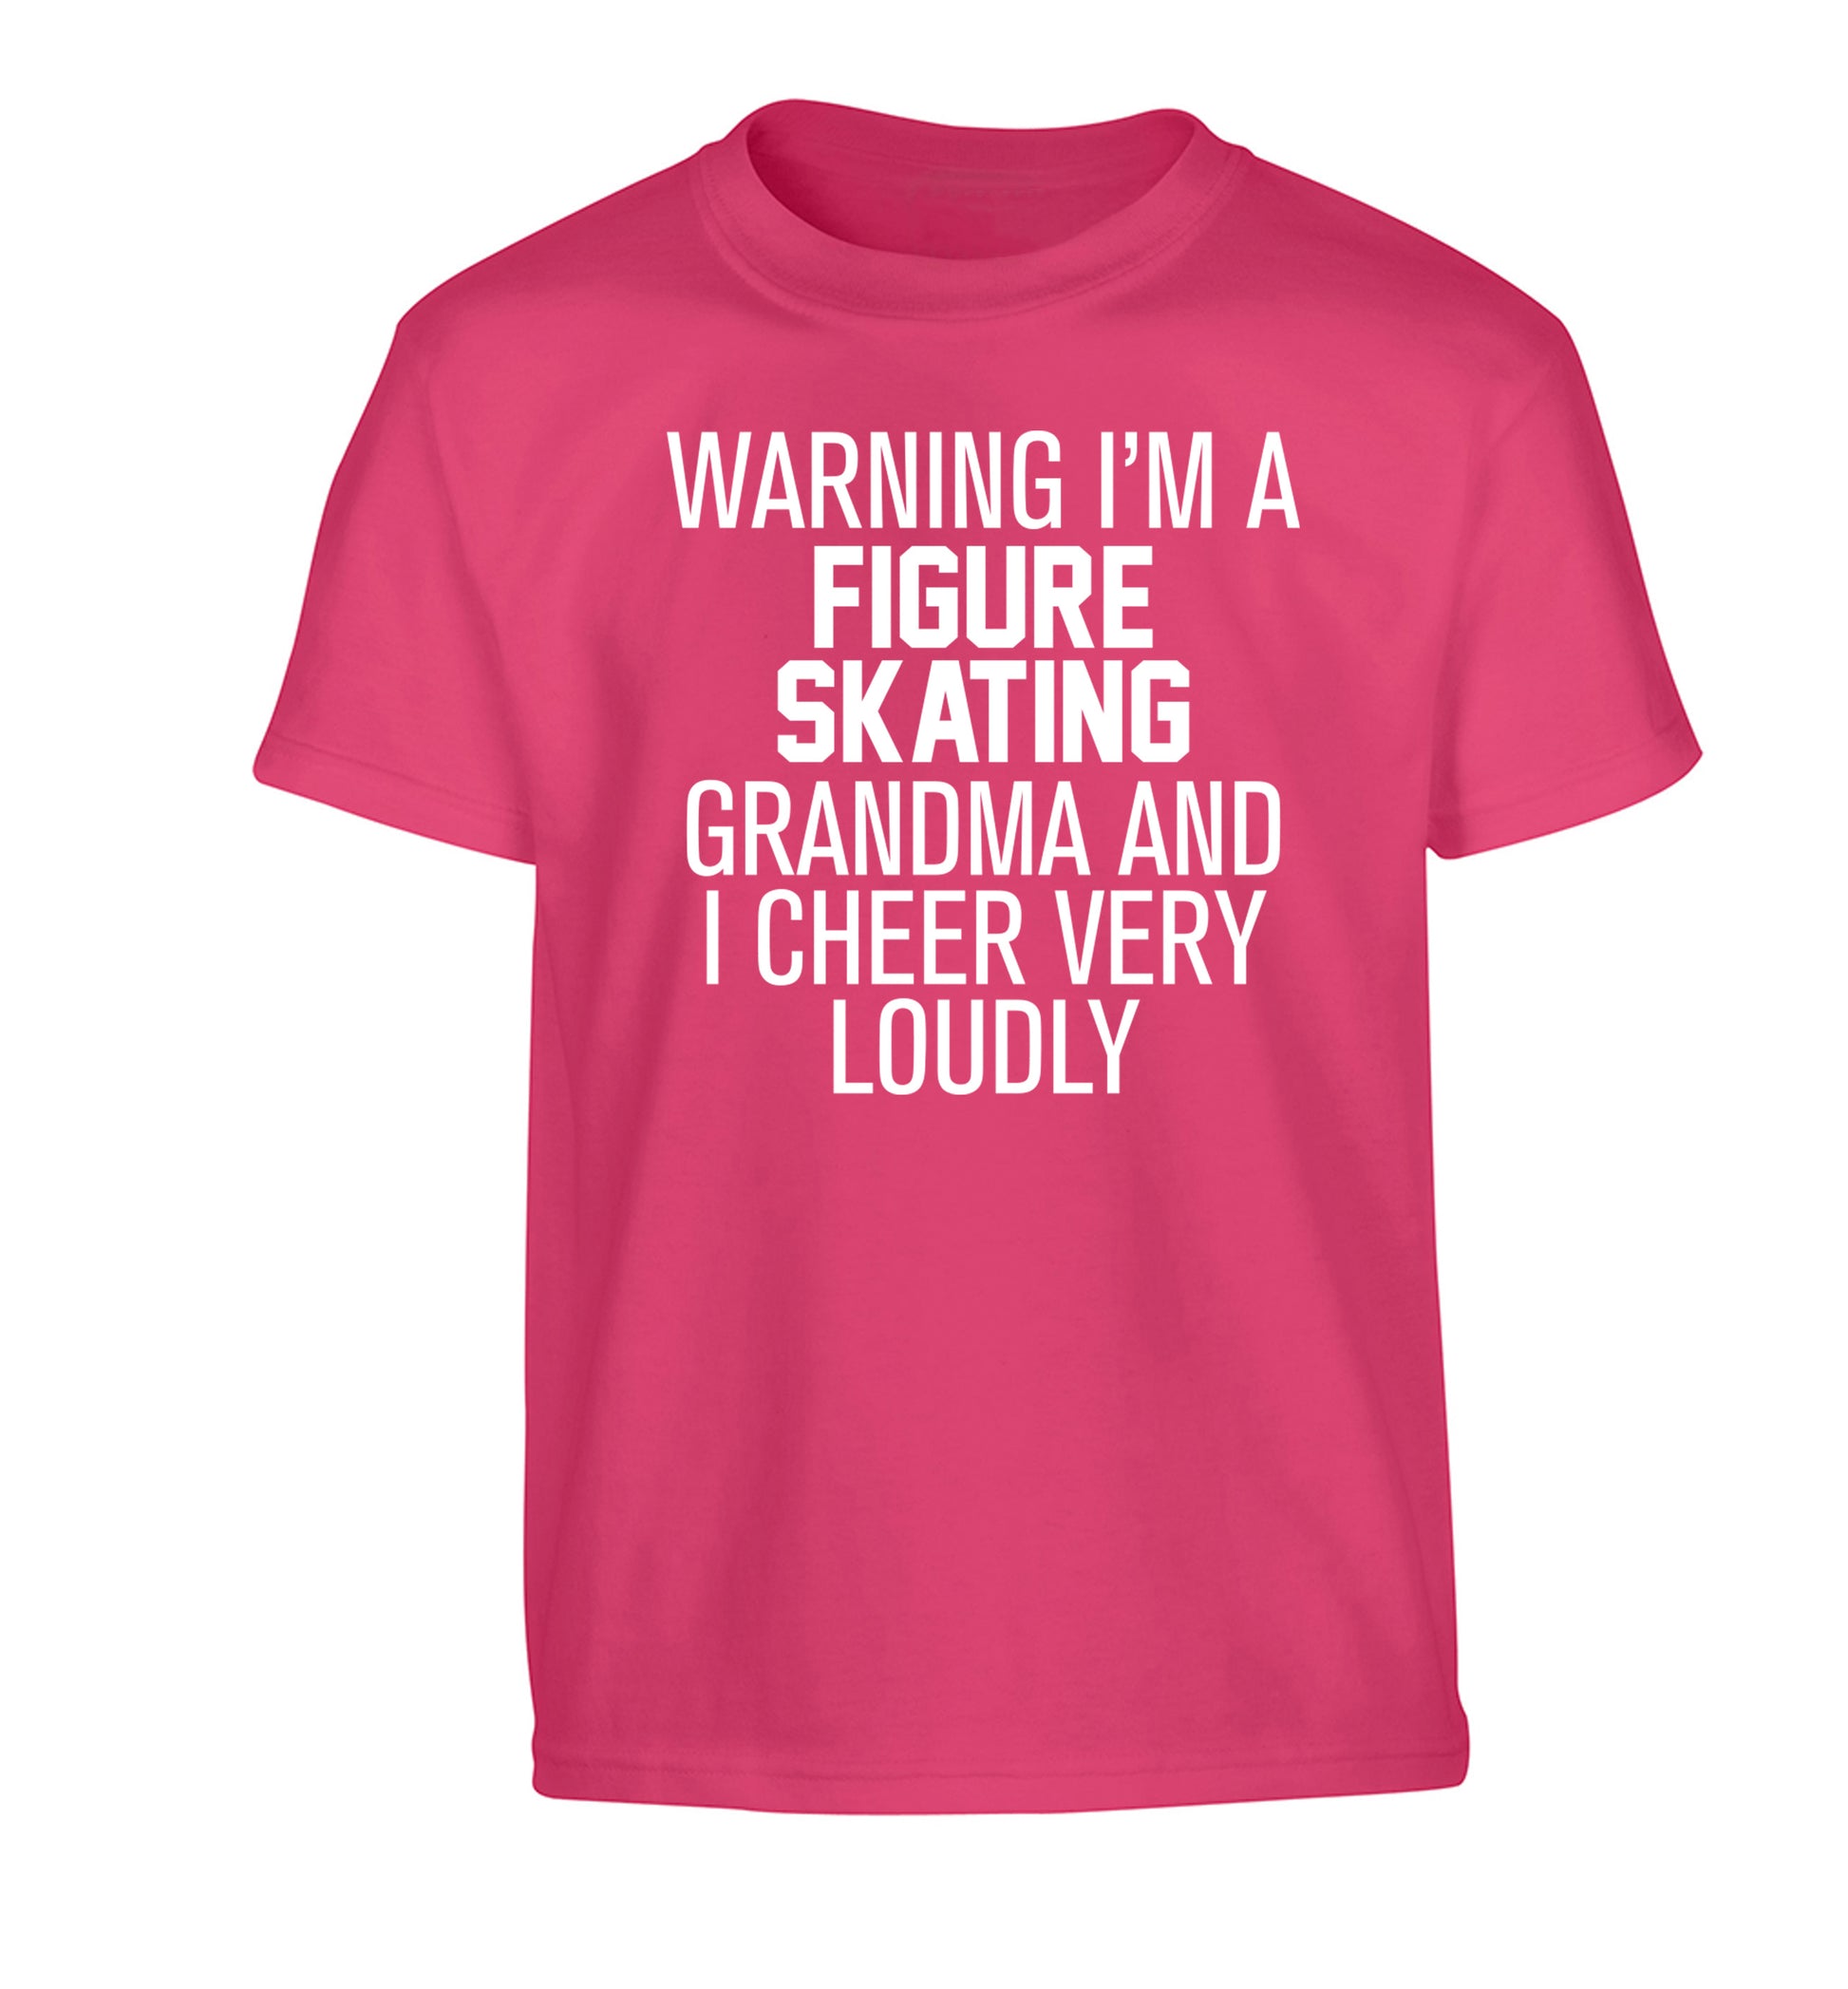 Warning I'm a figure skating grandma and I cheer very loudly Children's pink Tshirt 12-14 Years